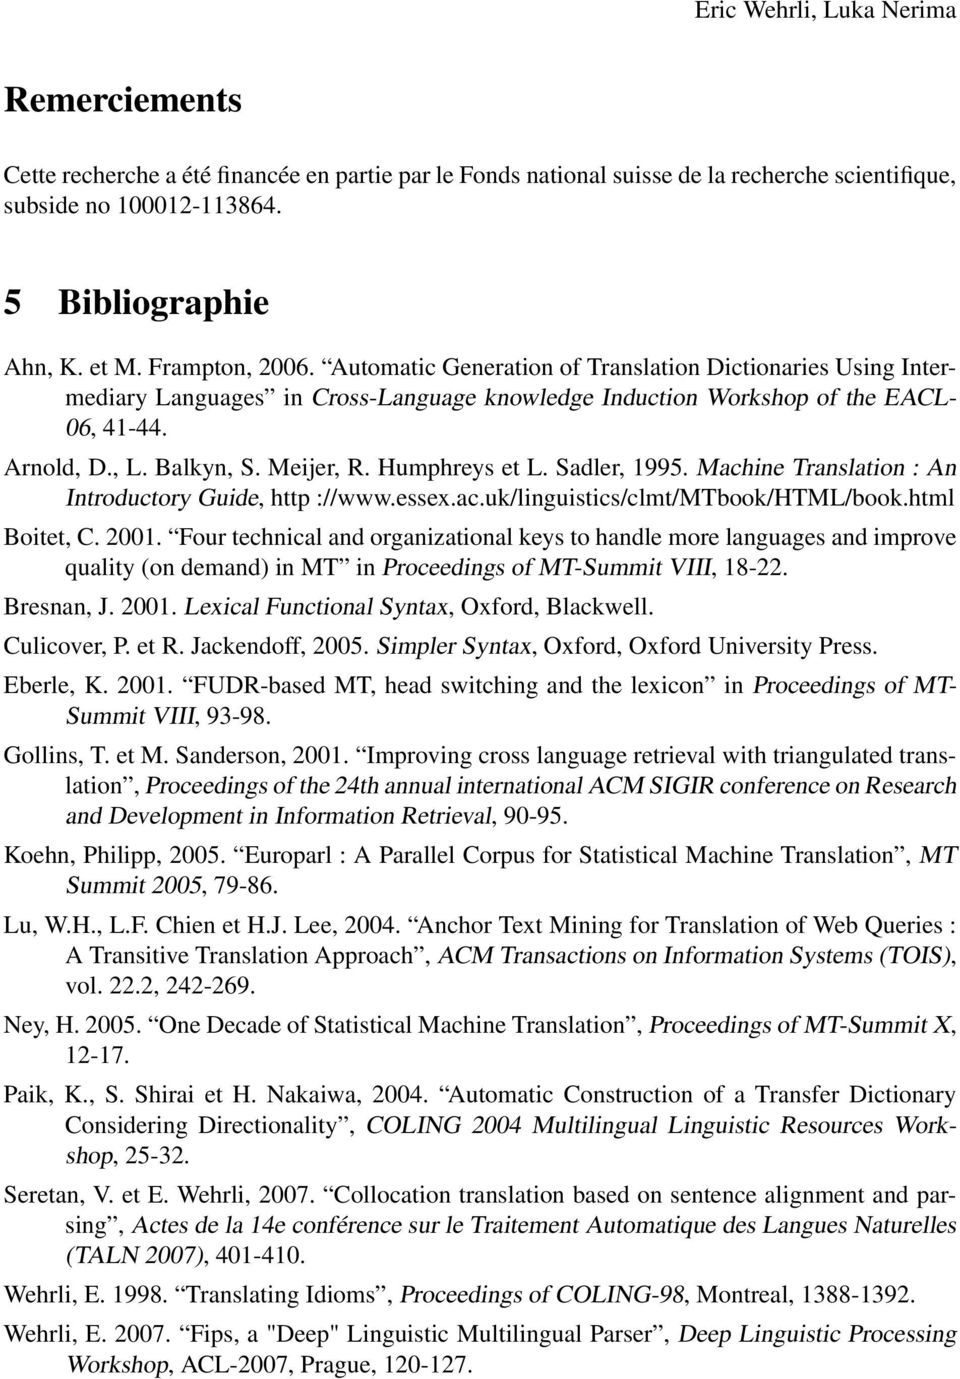 Meijer, R. Humphreys et L. Sadler, 1995. Machine Translation : An Introductory Guide, http ://www.essex.ac.uk/linguistics/clmt/mtbook/html/book.html Boitet, C. 2001.